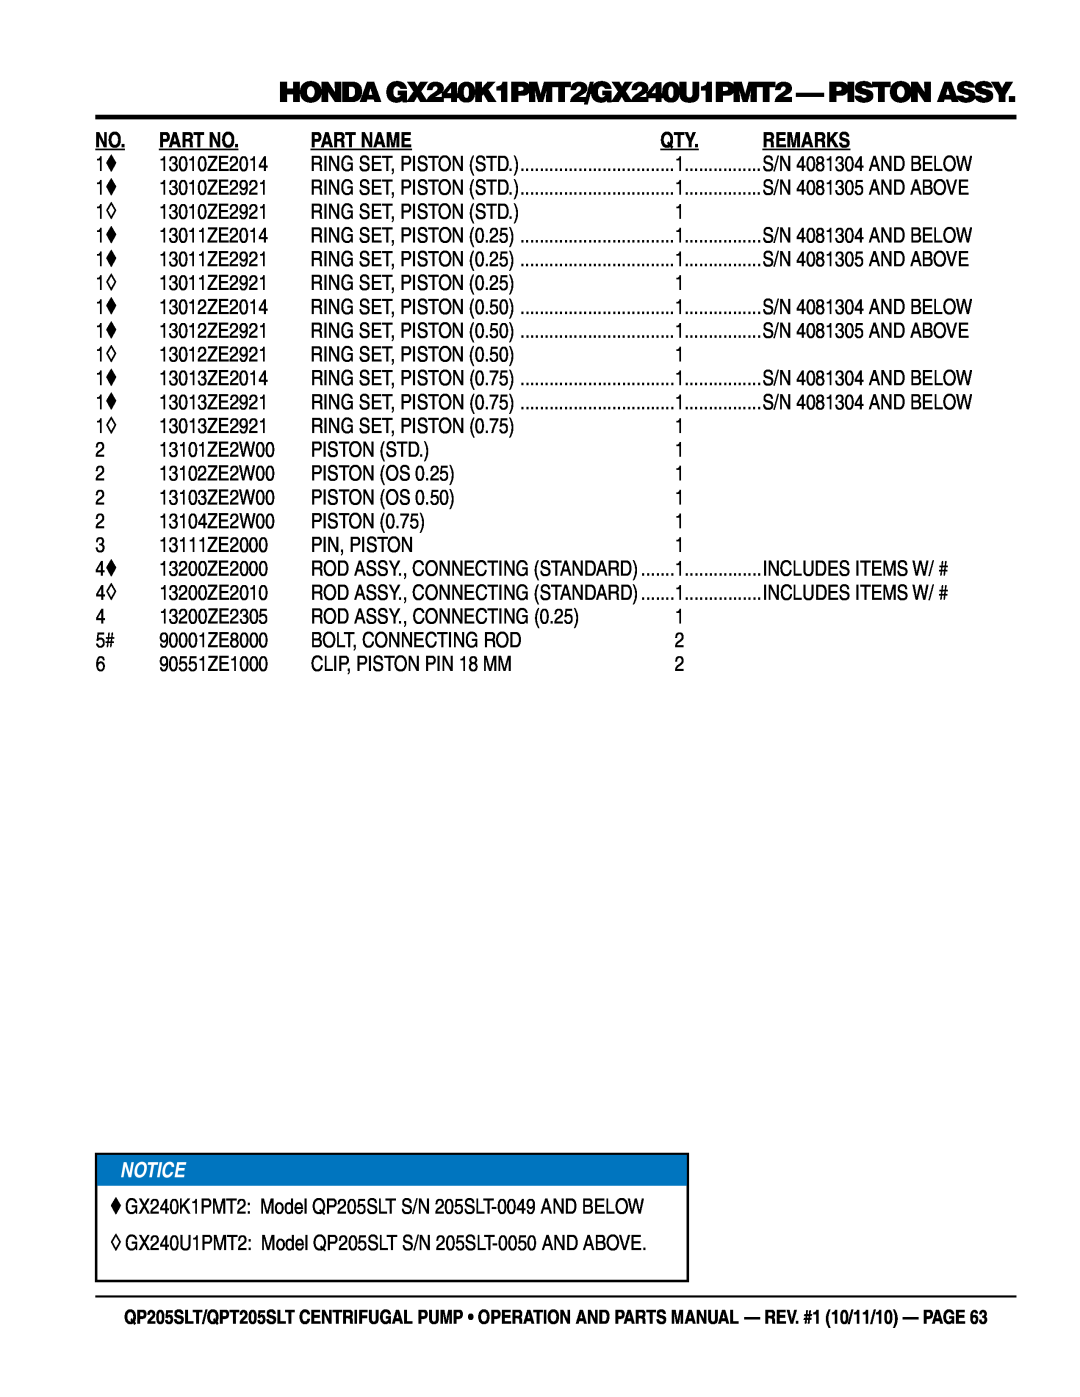 Multiquip QPT205SLT, QP205SLT manual honda GX240K1PMT2/GX240U1PMT2 - piston assy, Part Name, Remarks 